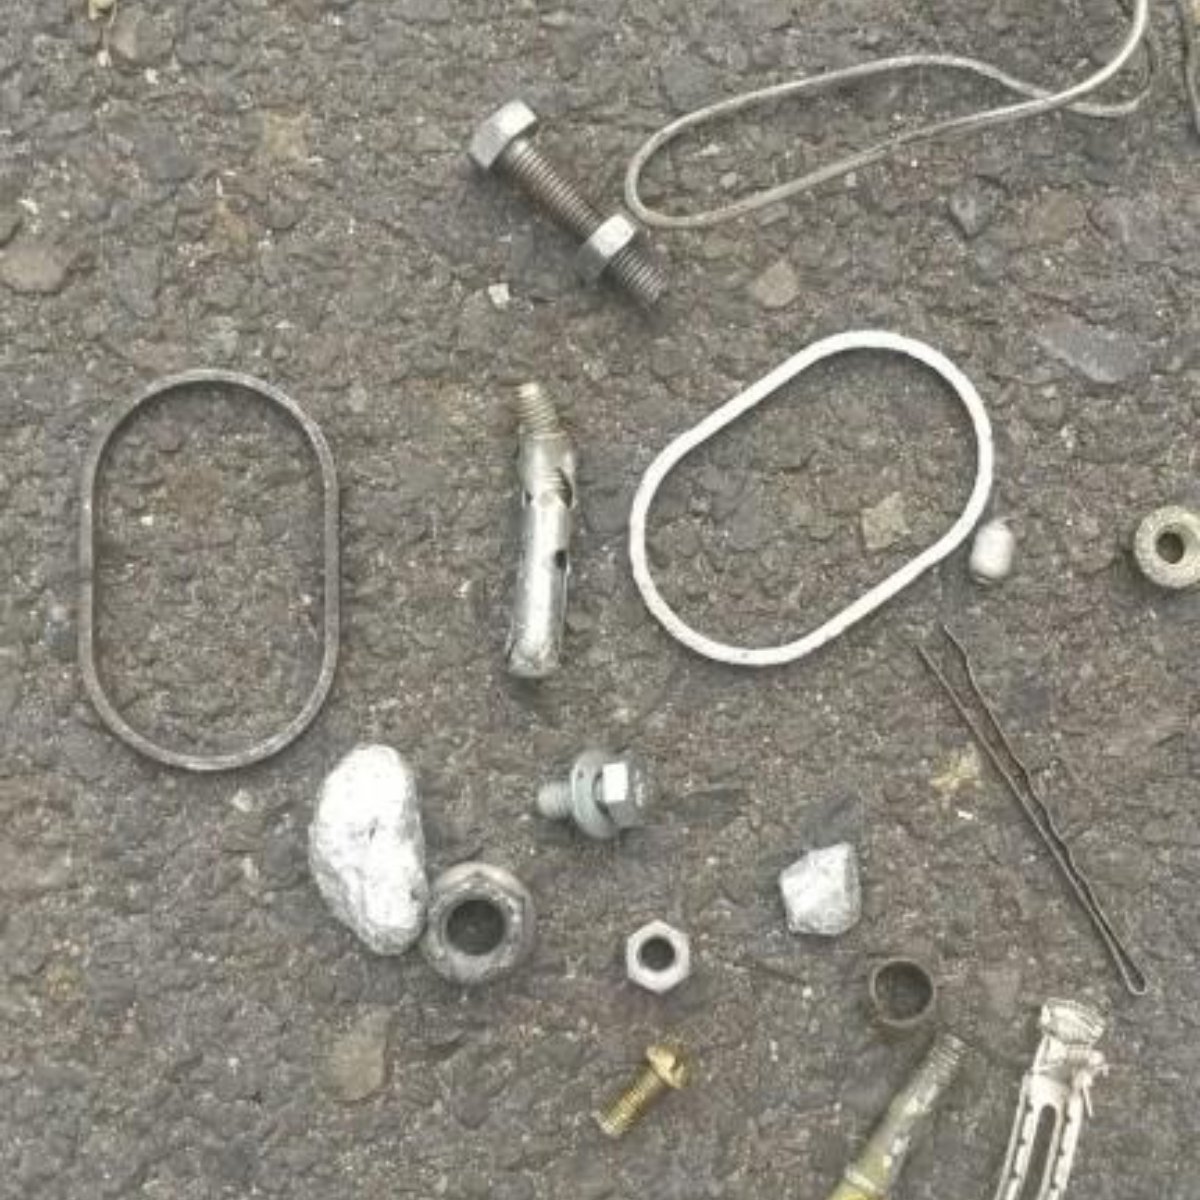 various debris found on racetrack